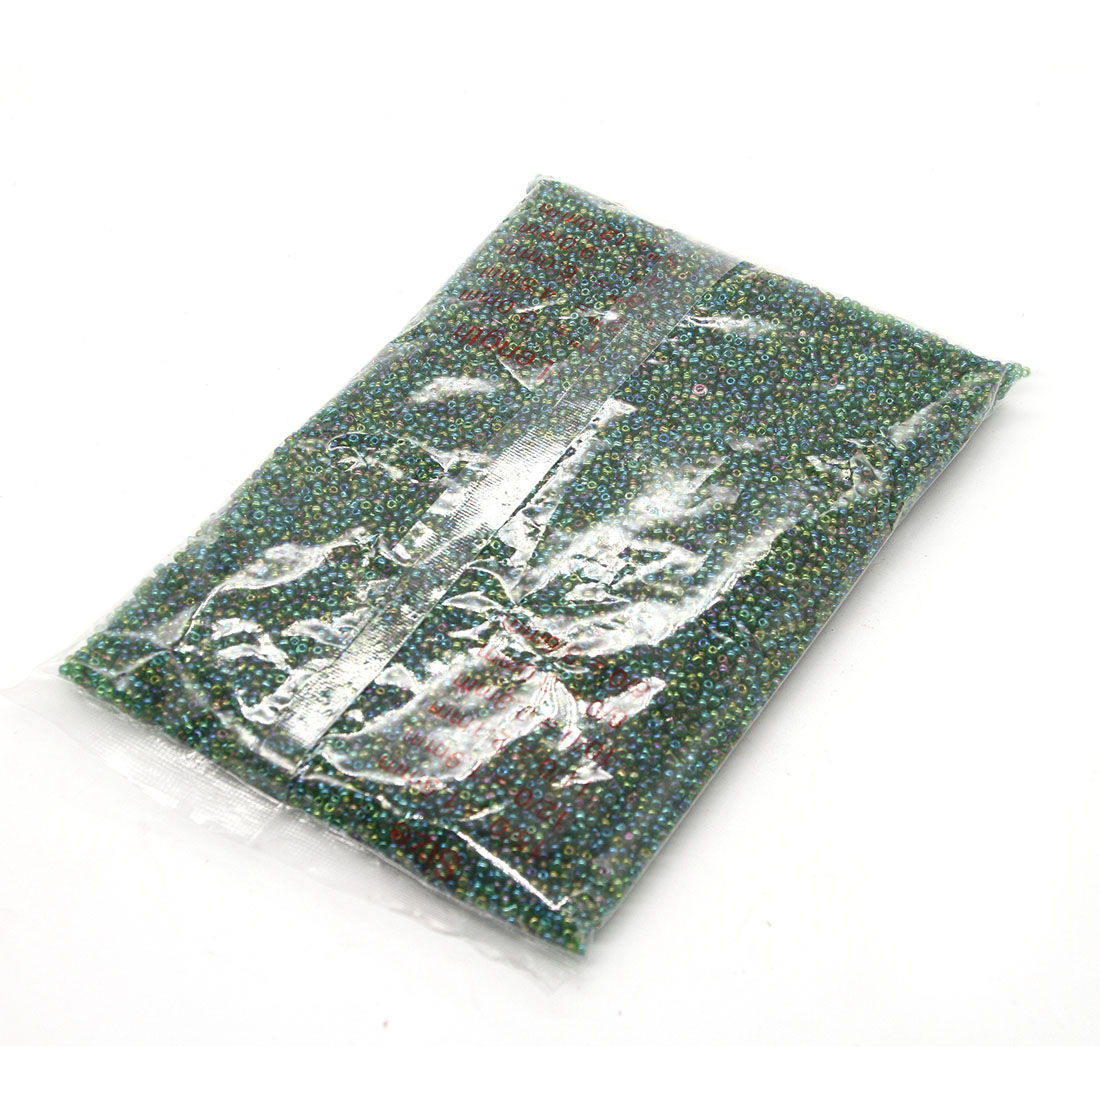 Dark green 2mm pack of 30,000